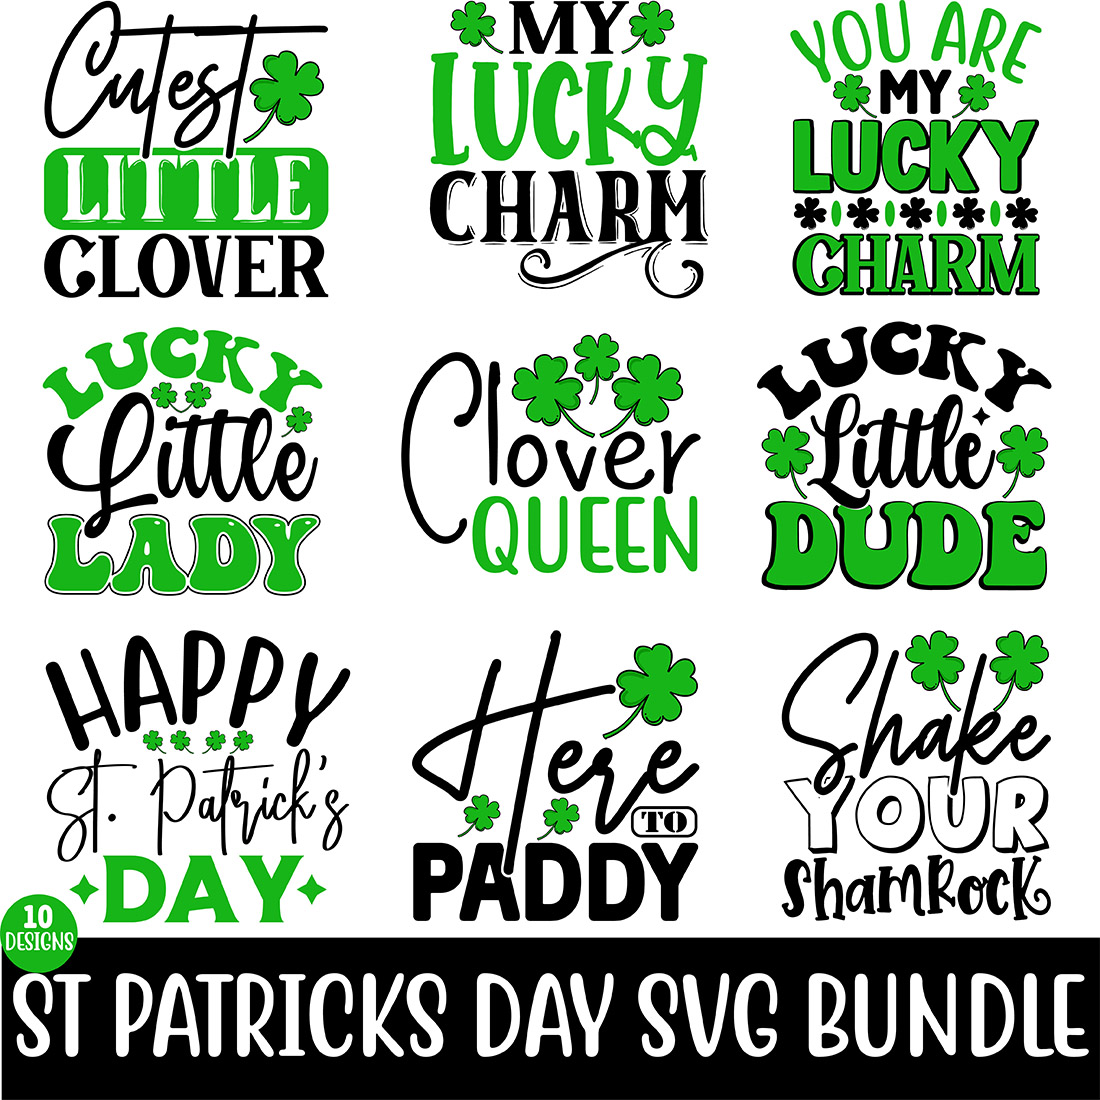 St Patricks Day SVG Bundle main cover.